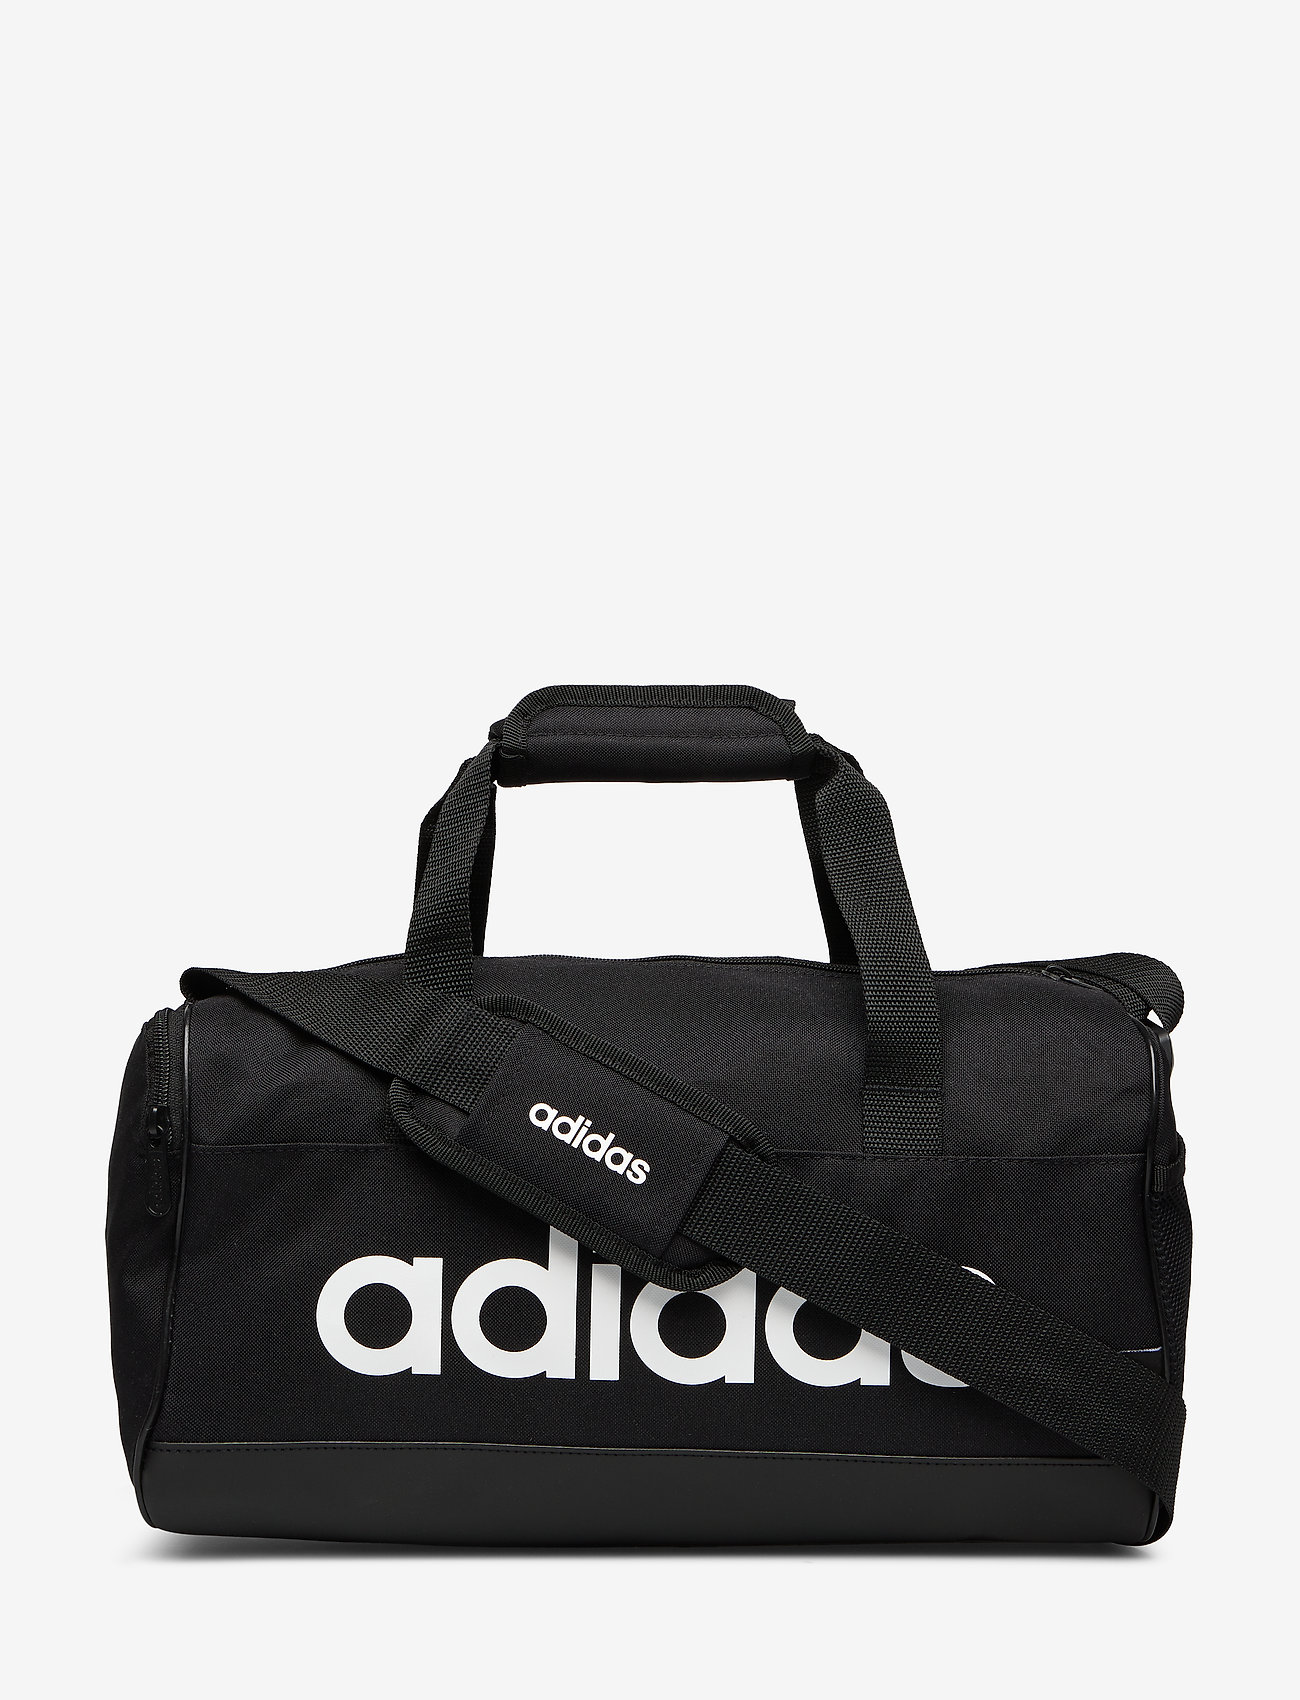 black and white adidas duffle bag